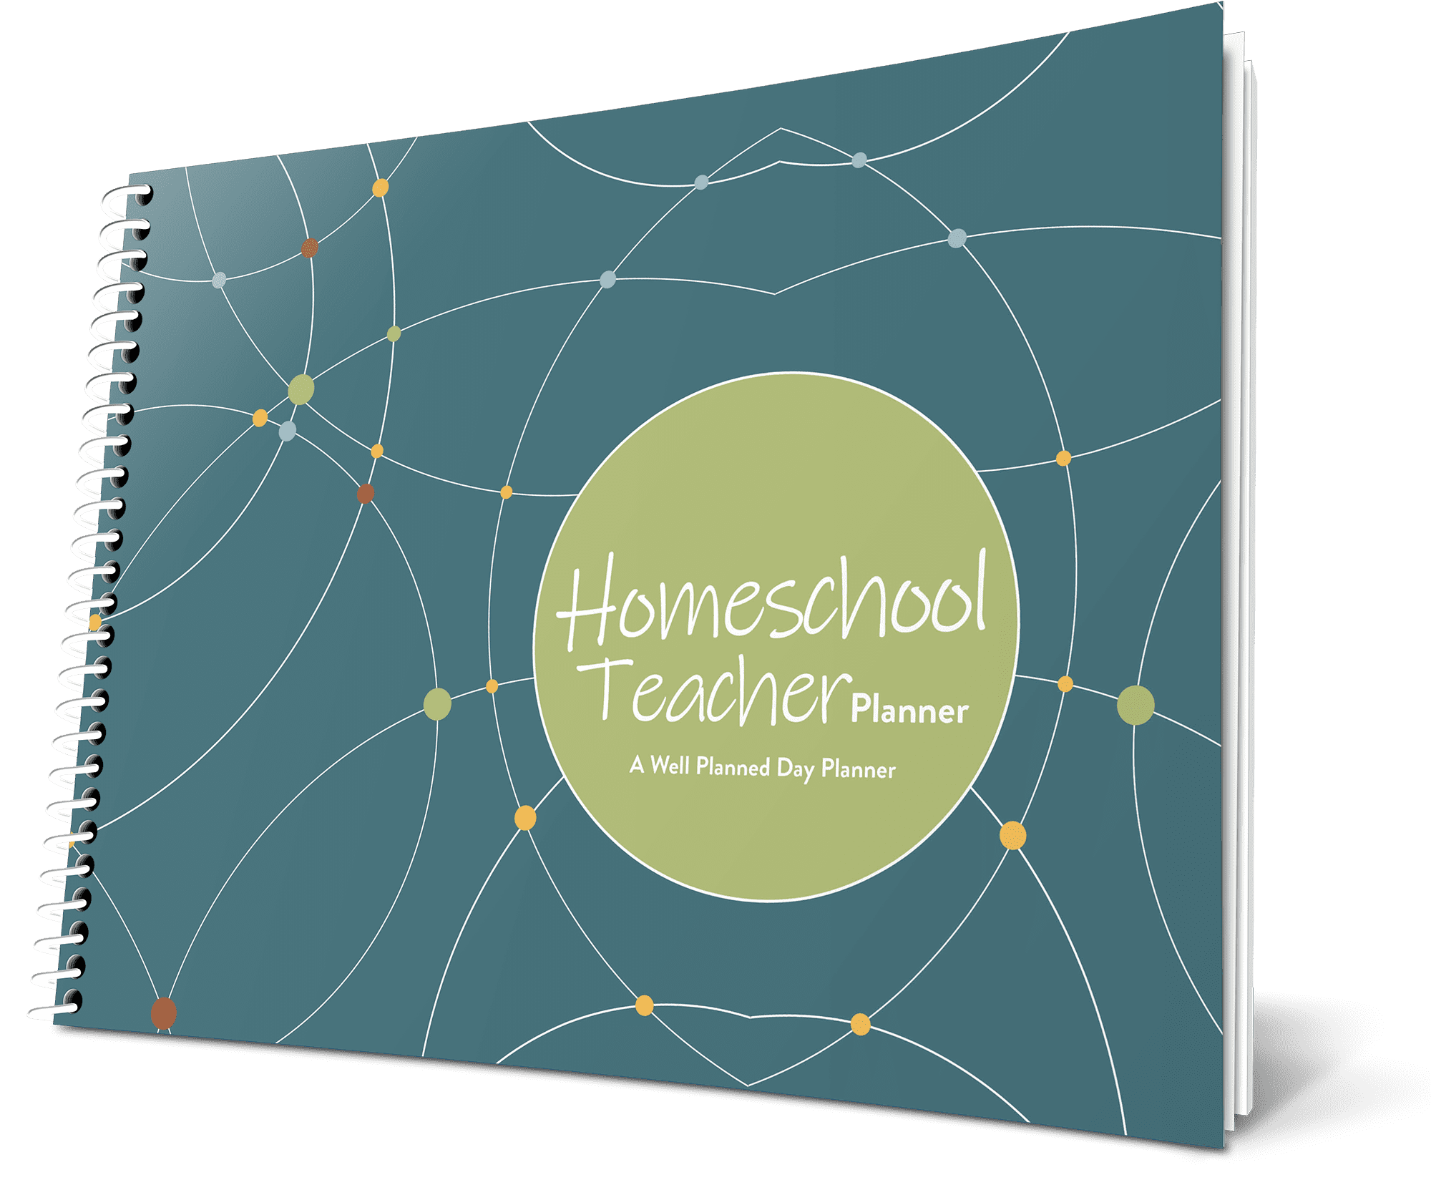 Preview Your Custom Homeschool Planner!